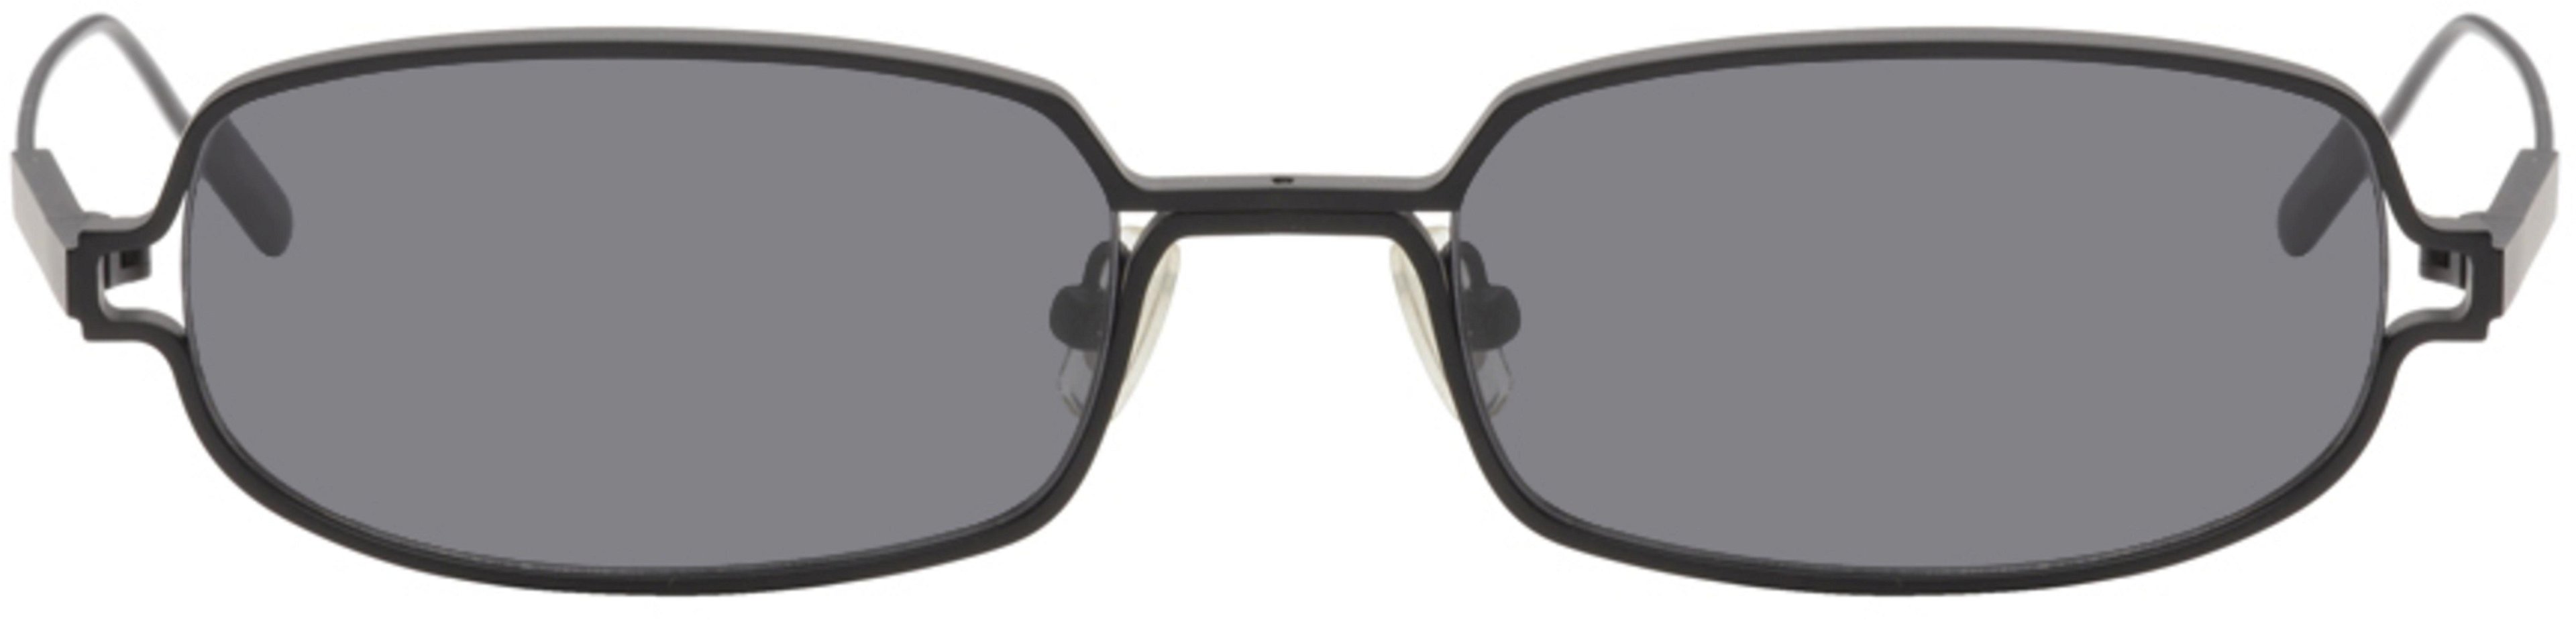 Black Petrichor Sunglasses by BONNIE CLYDE